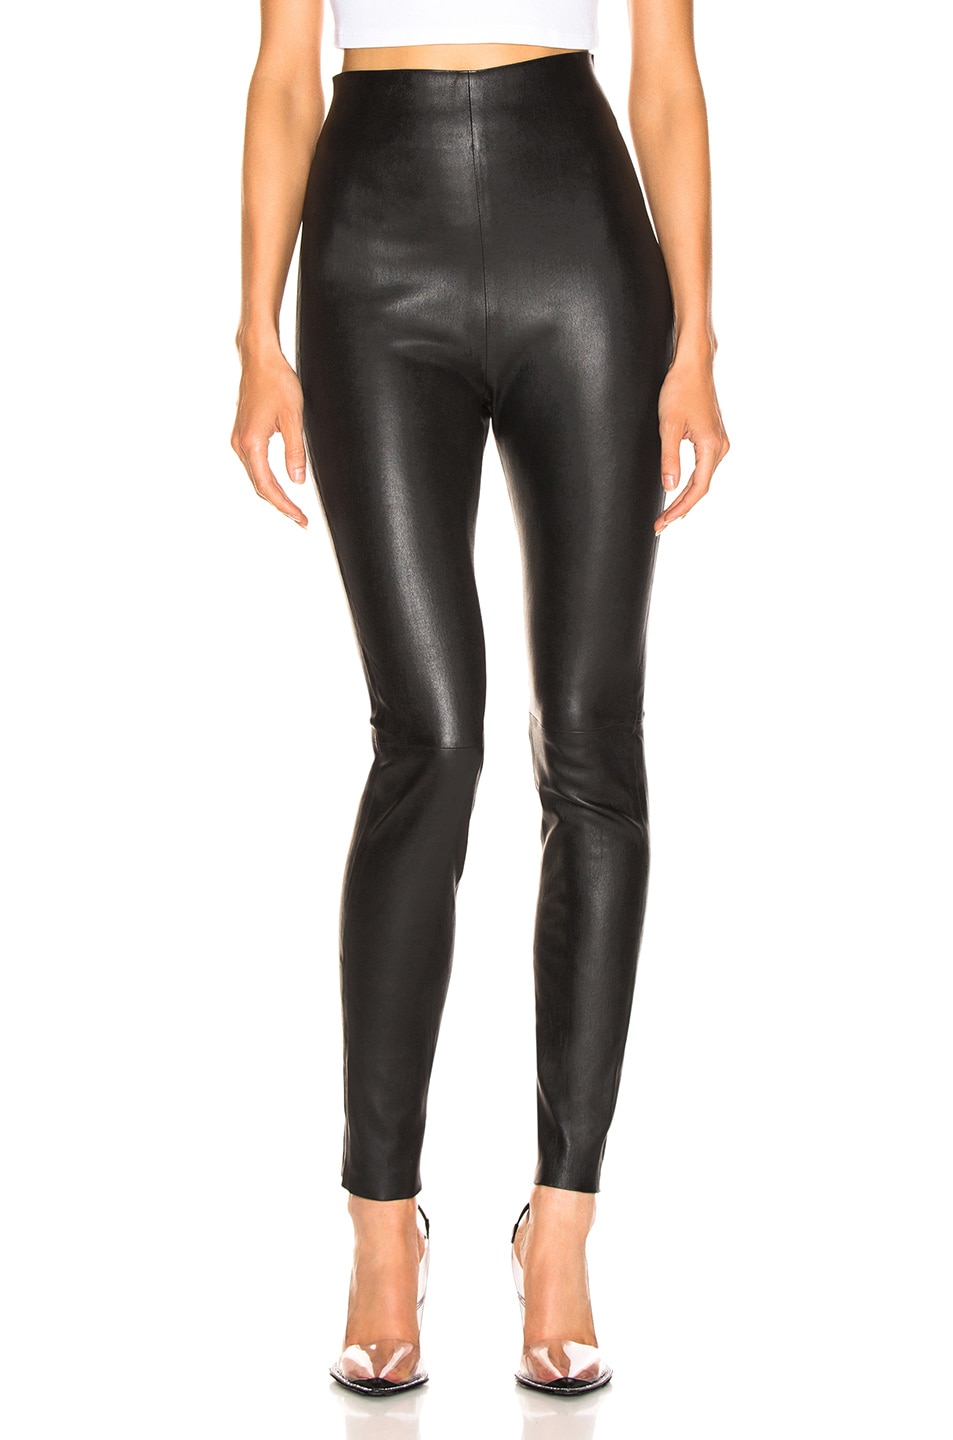 SABLYN Jessica Pants in Black Leather | FWRD